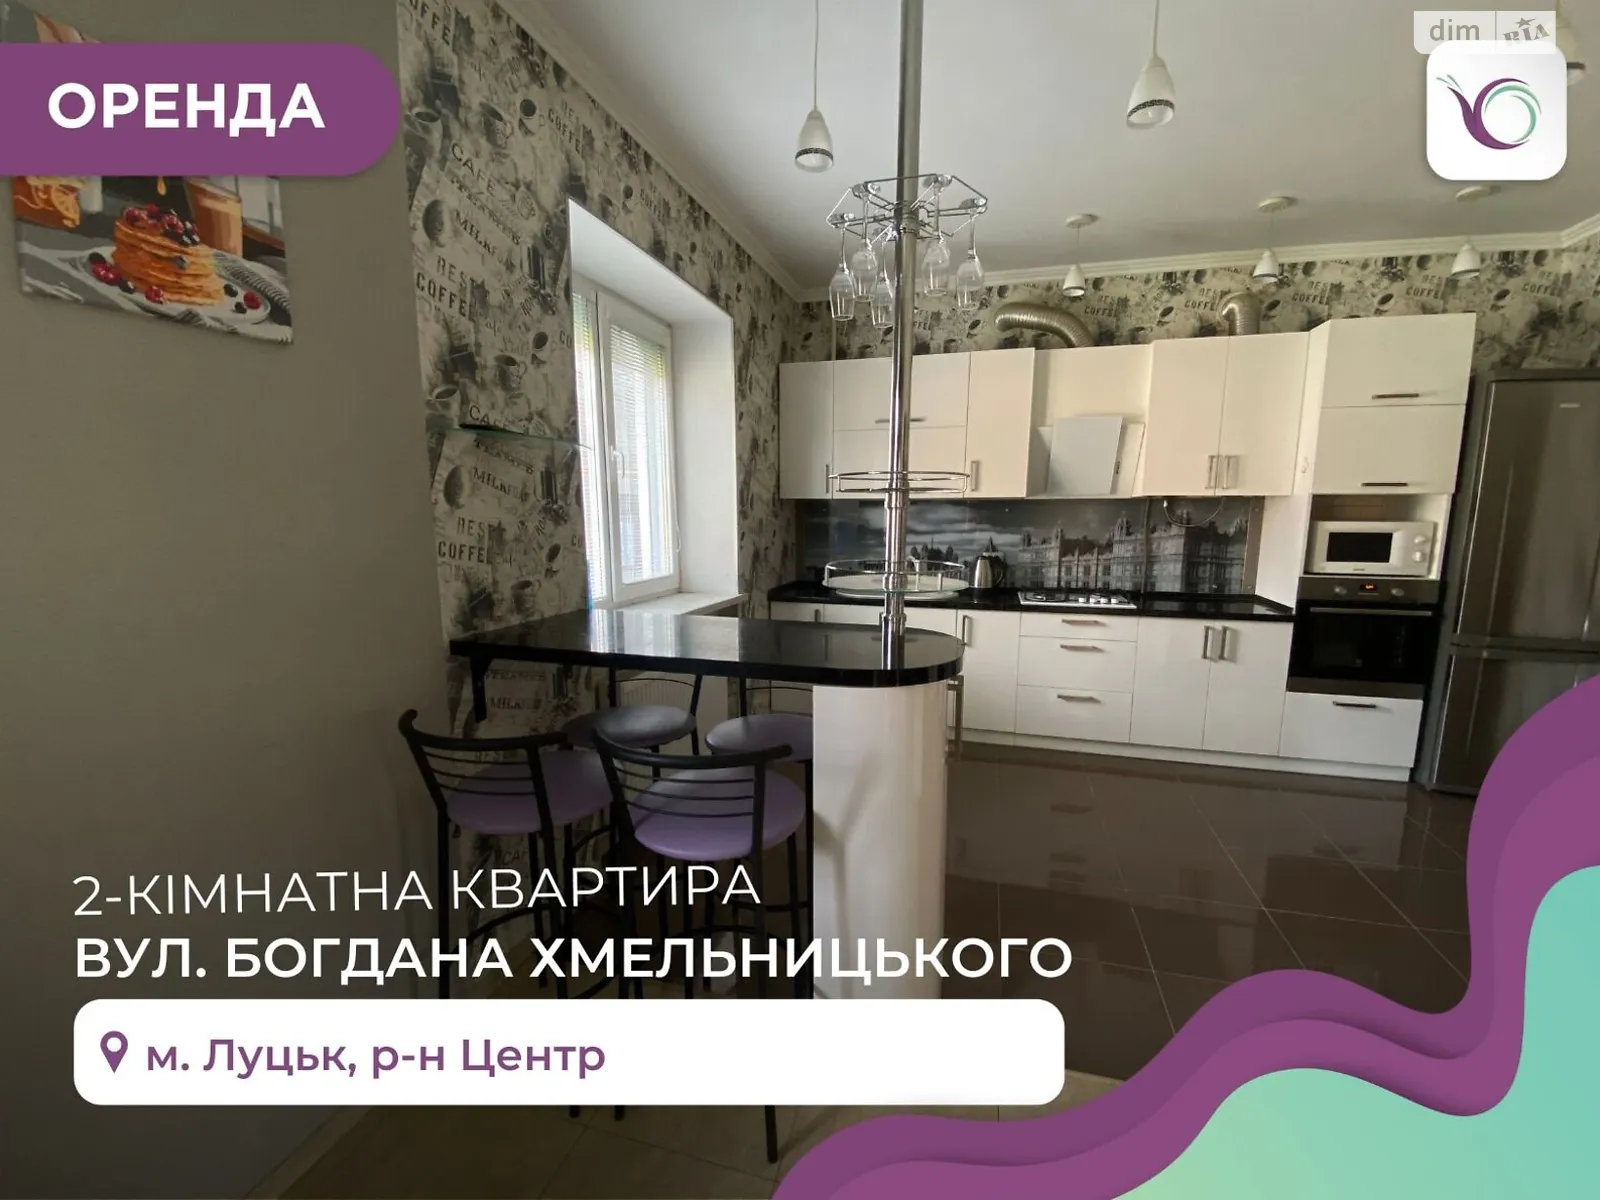 2-кімнатна квартира 59 кв. м у Луцьку, цена: 12500 грн